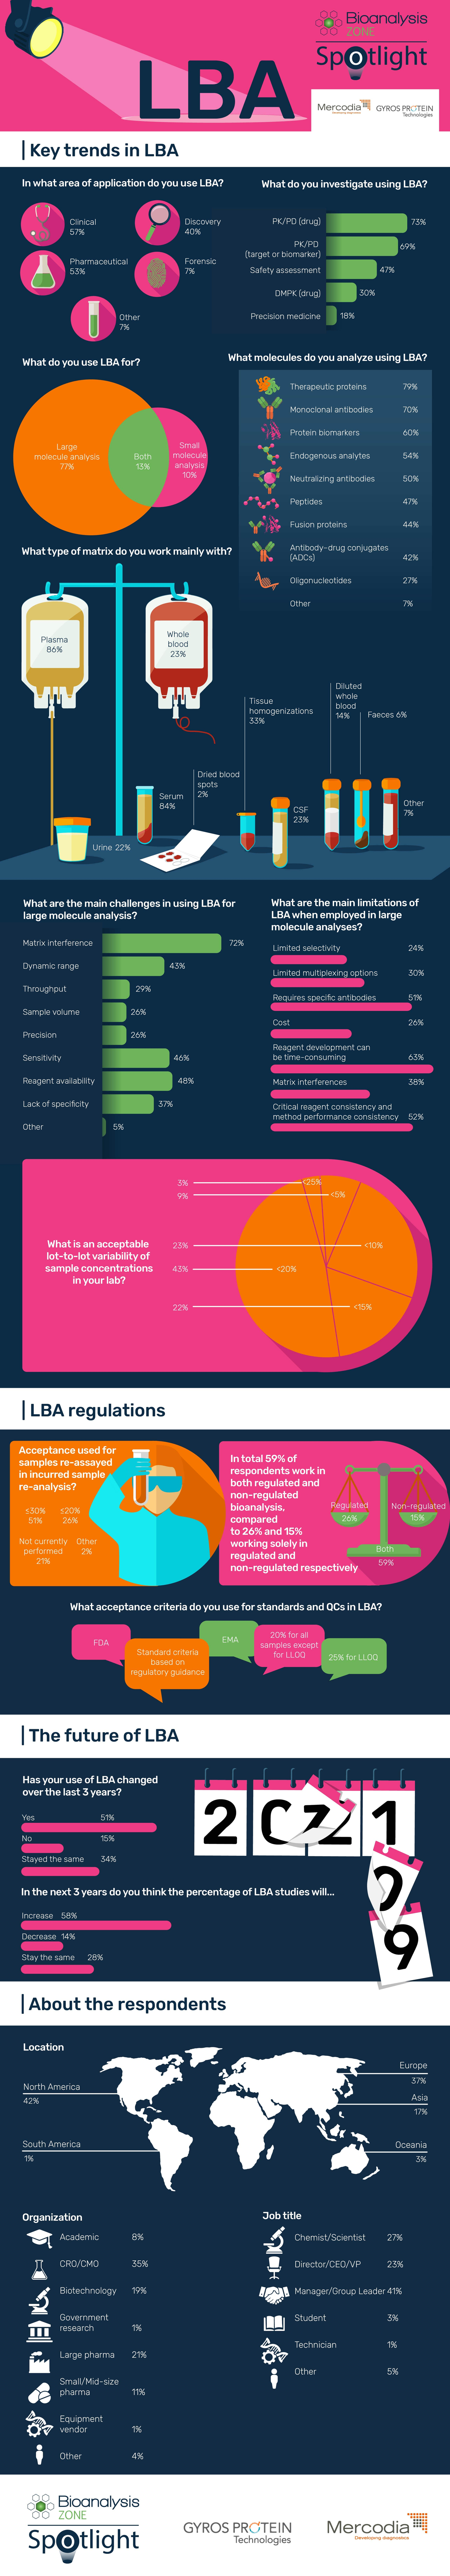 LBA spotlight infographic